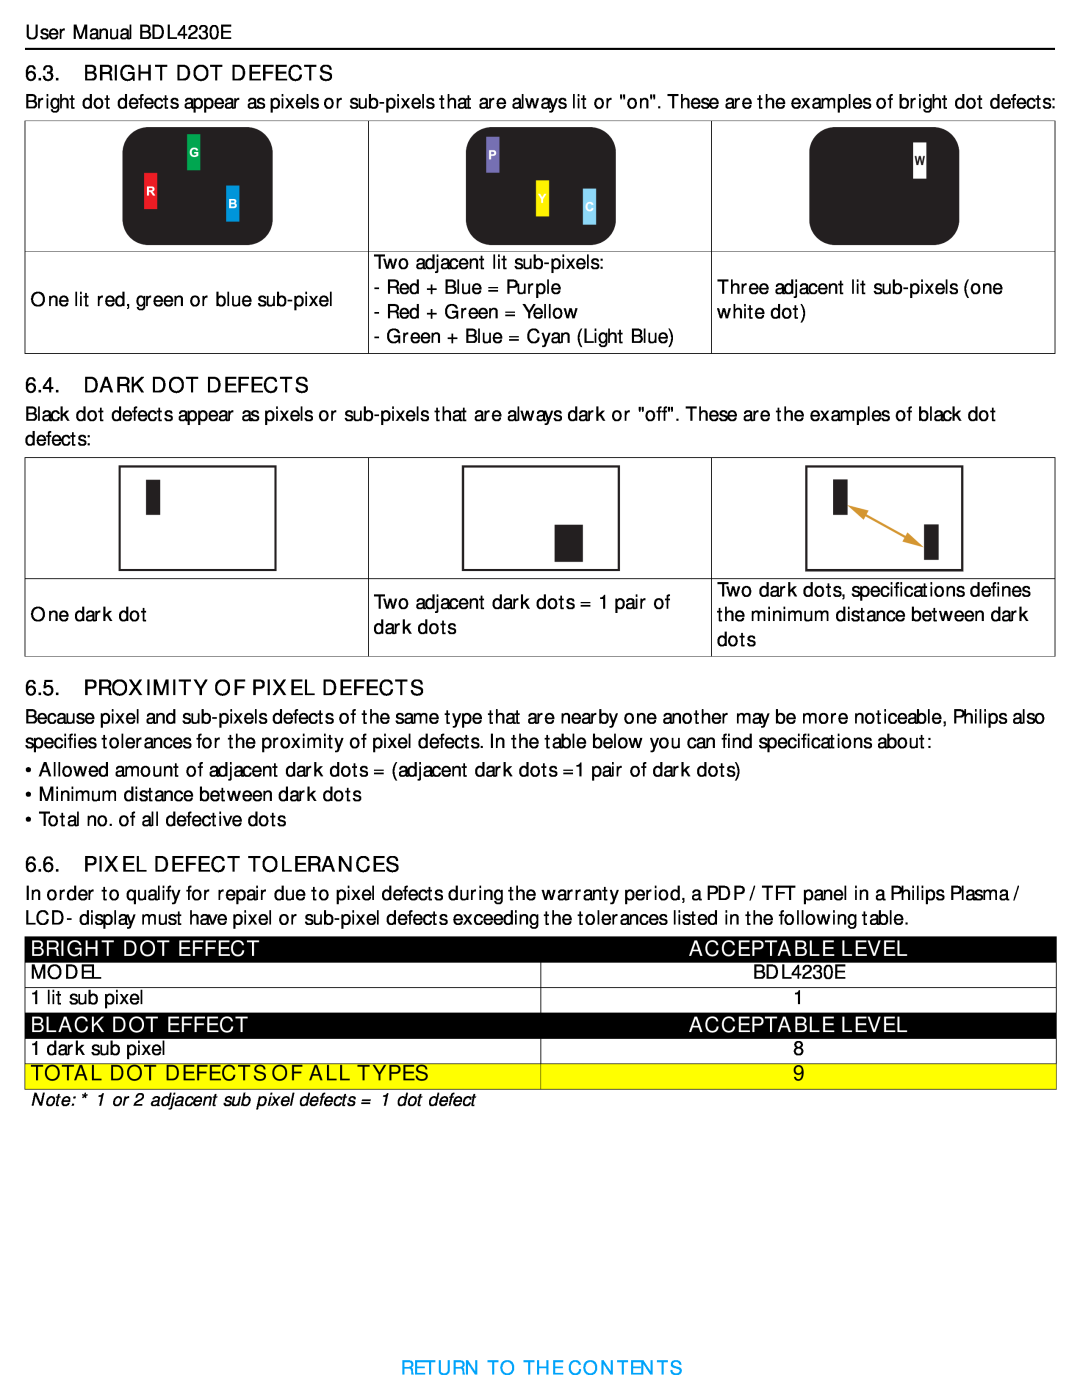 Philips BDL4230E user manual Bright Dot Defects, Dark Dot Defects, Proximity Of Pixel Defects, Pixel Defect Tolerances 